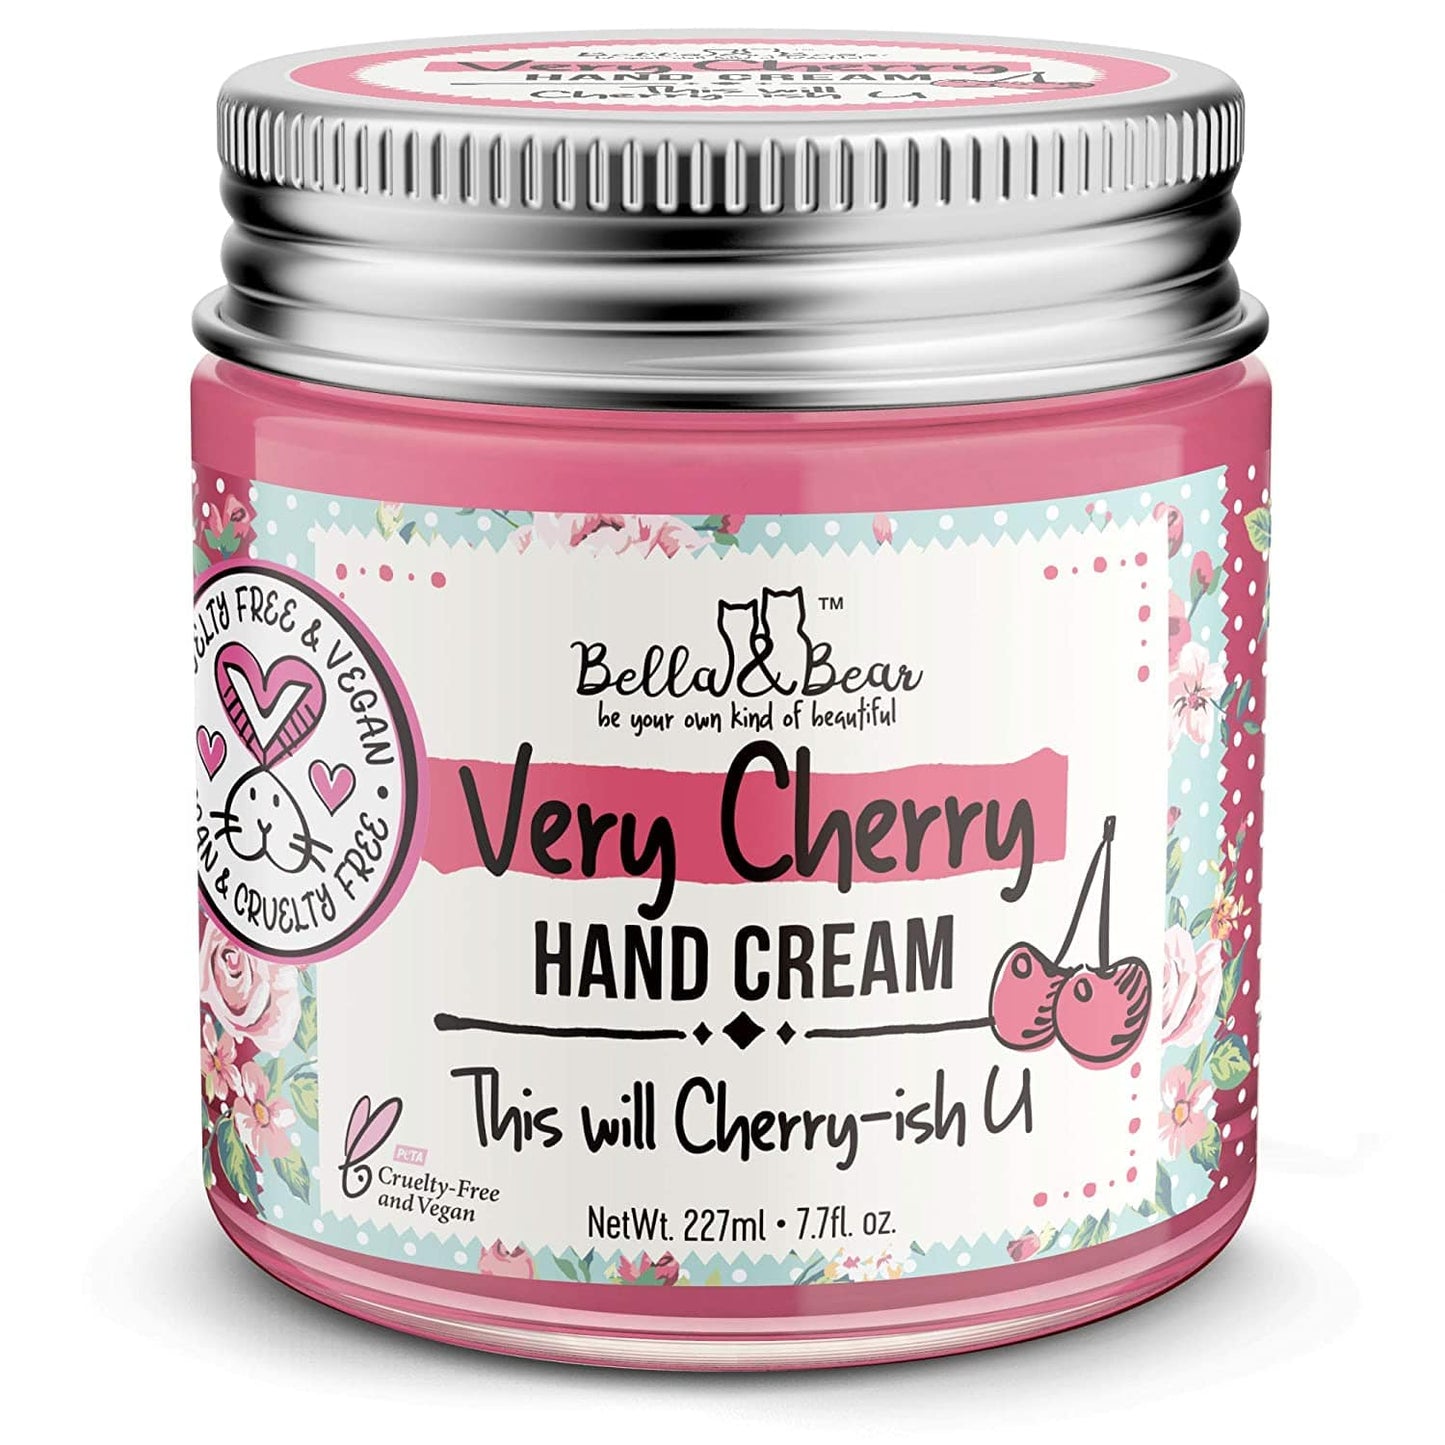 Very Cherry Hand Cream 6.7oz